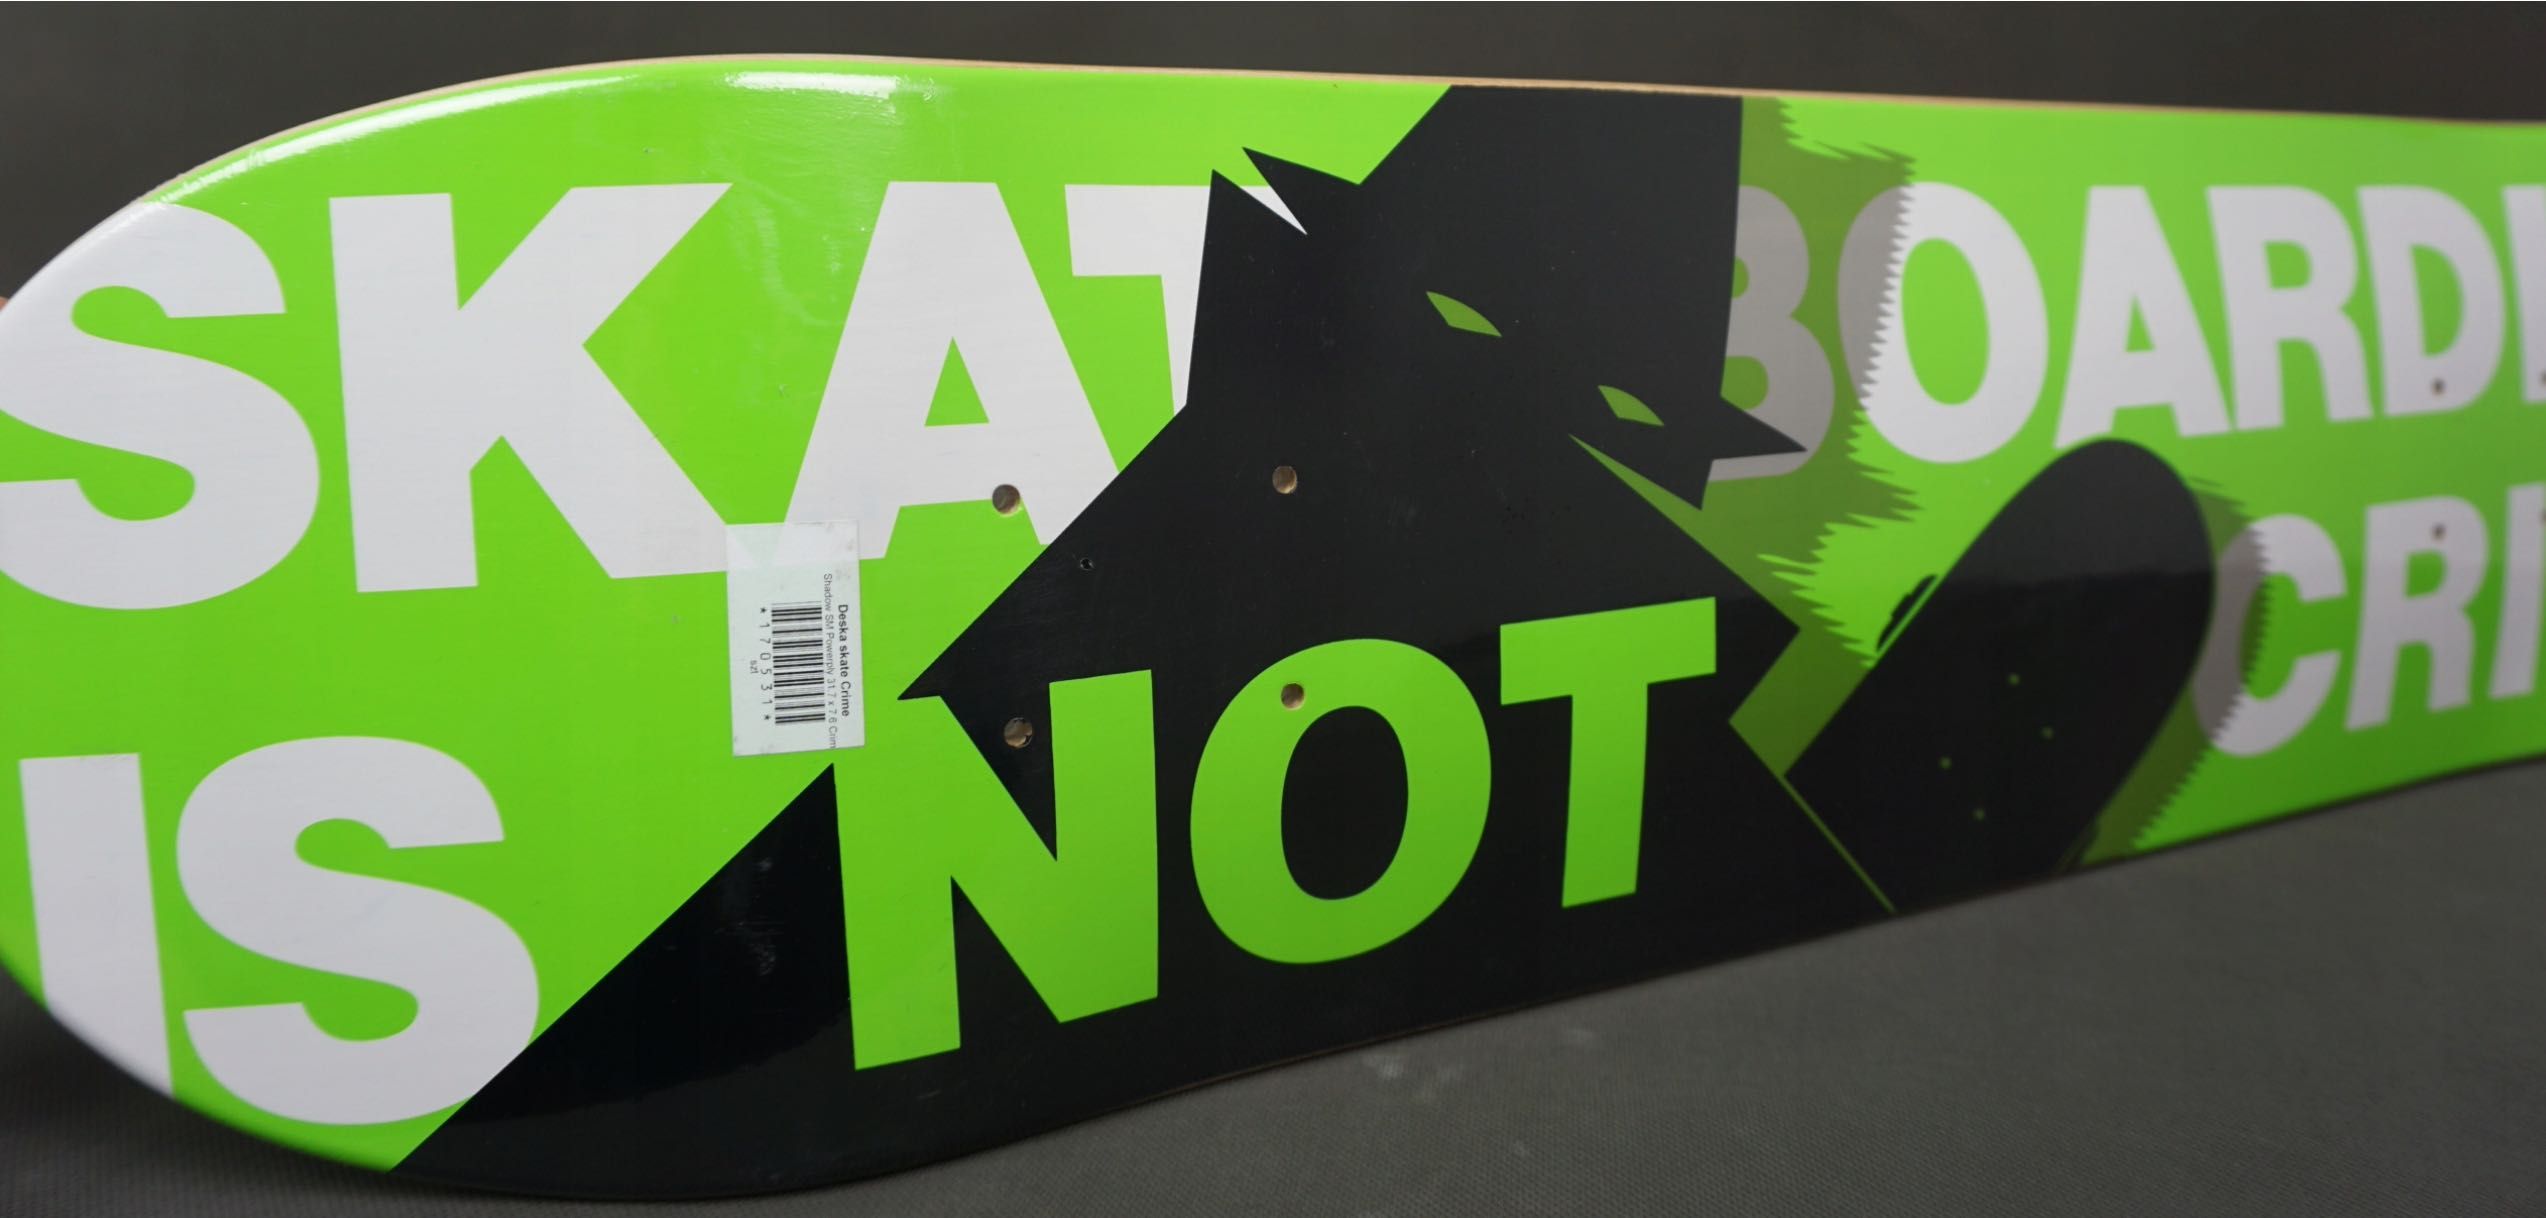 Blat Deck Skateboarding is not a Crime 7,6. -NEW-